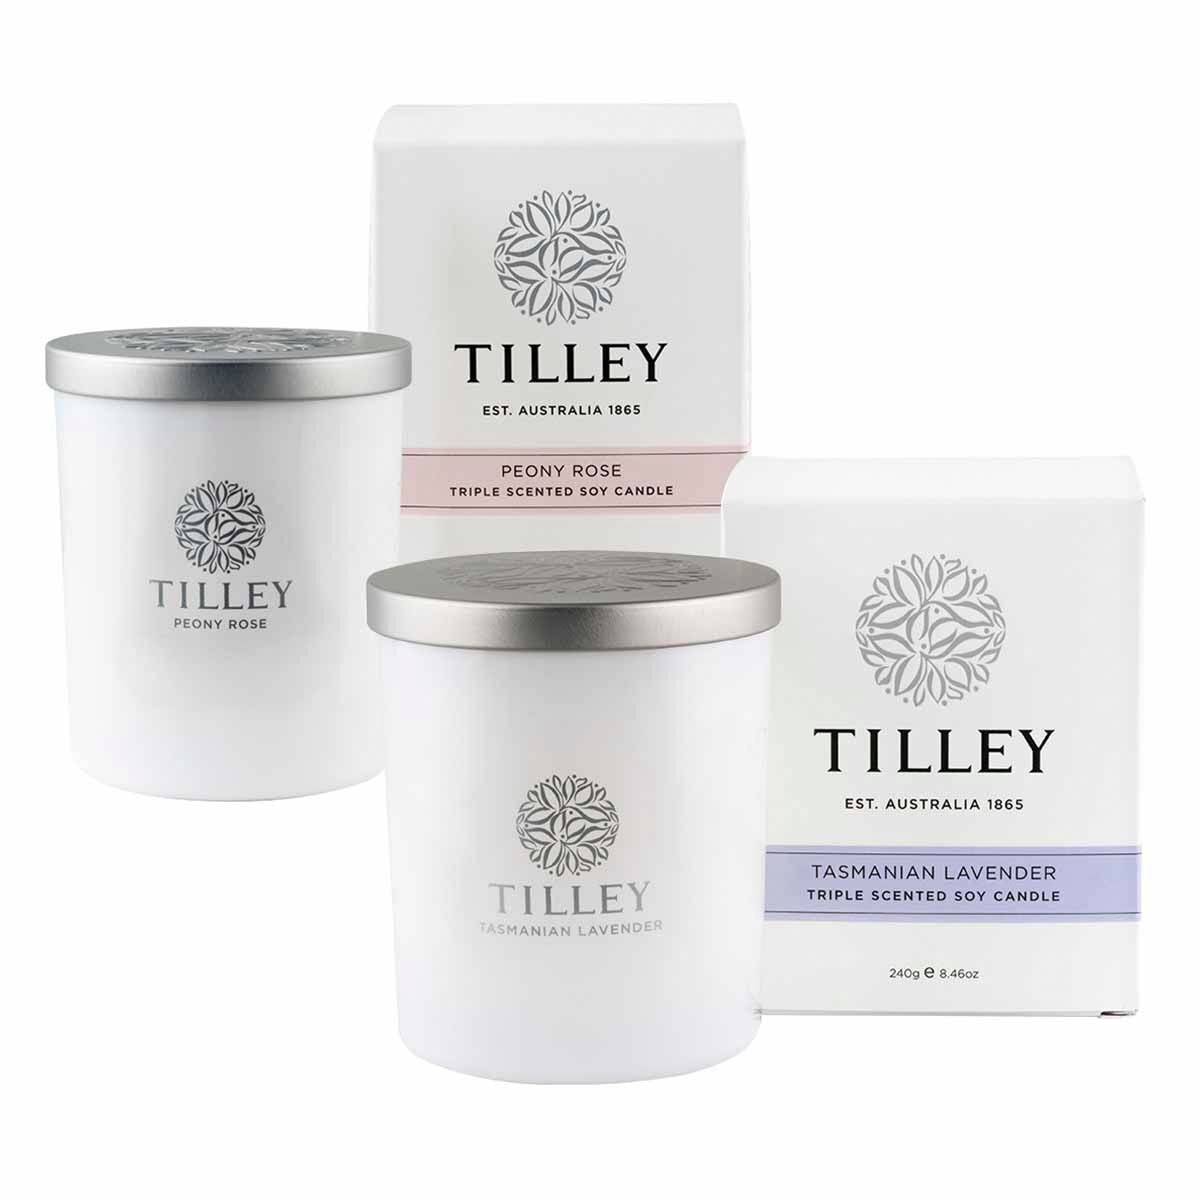 Tilley 微醺大豆香氛蠟燭2入組